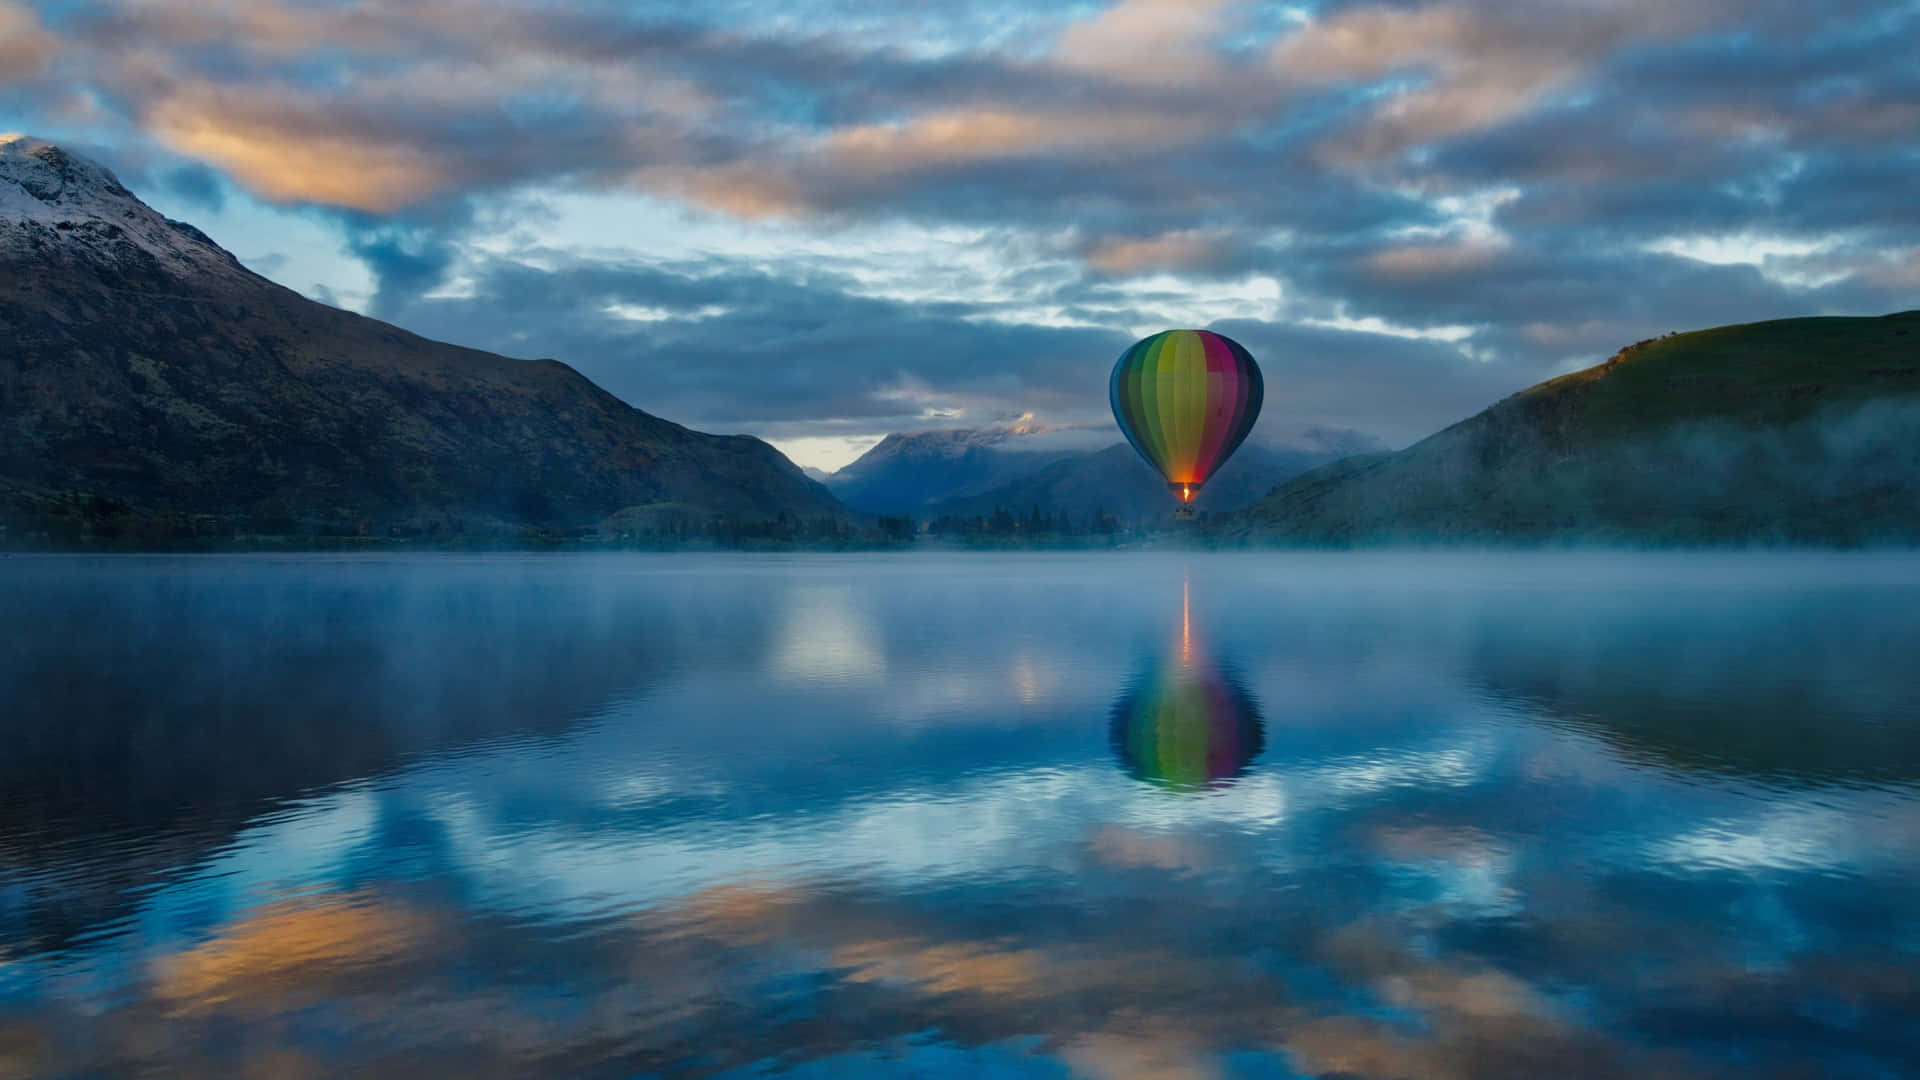 Image  Colorful Hot Air Balloon Soaring Through Clear Skies